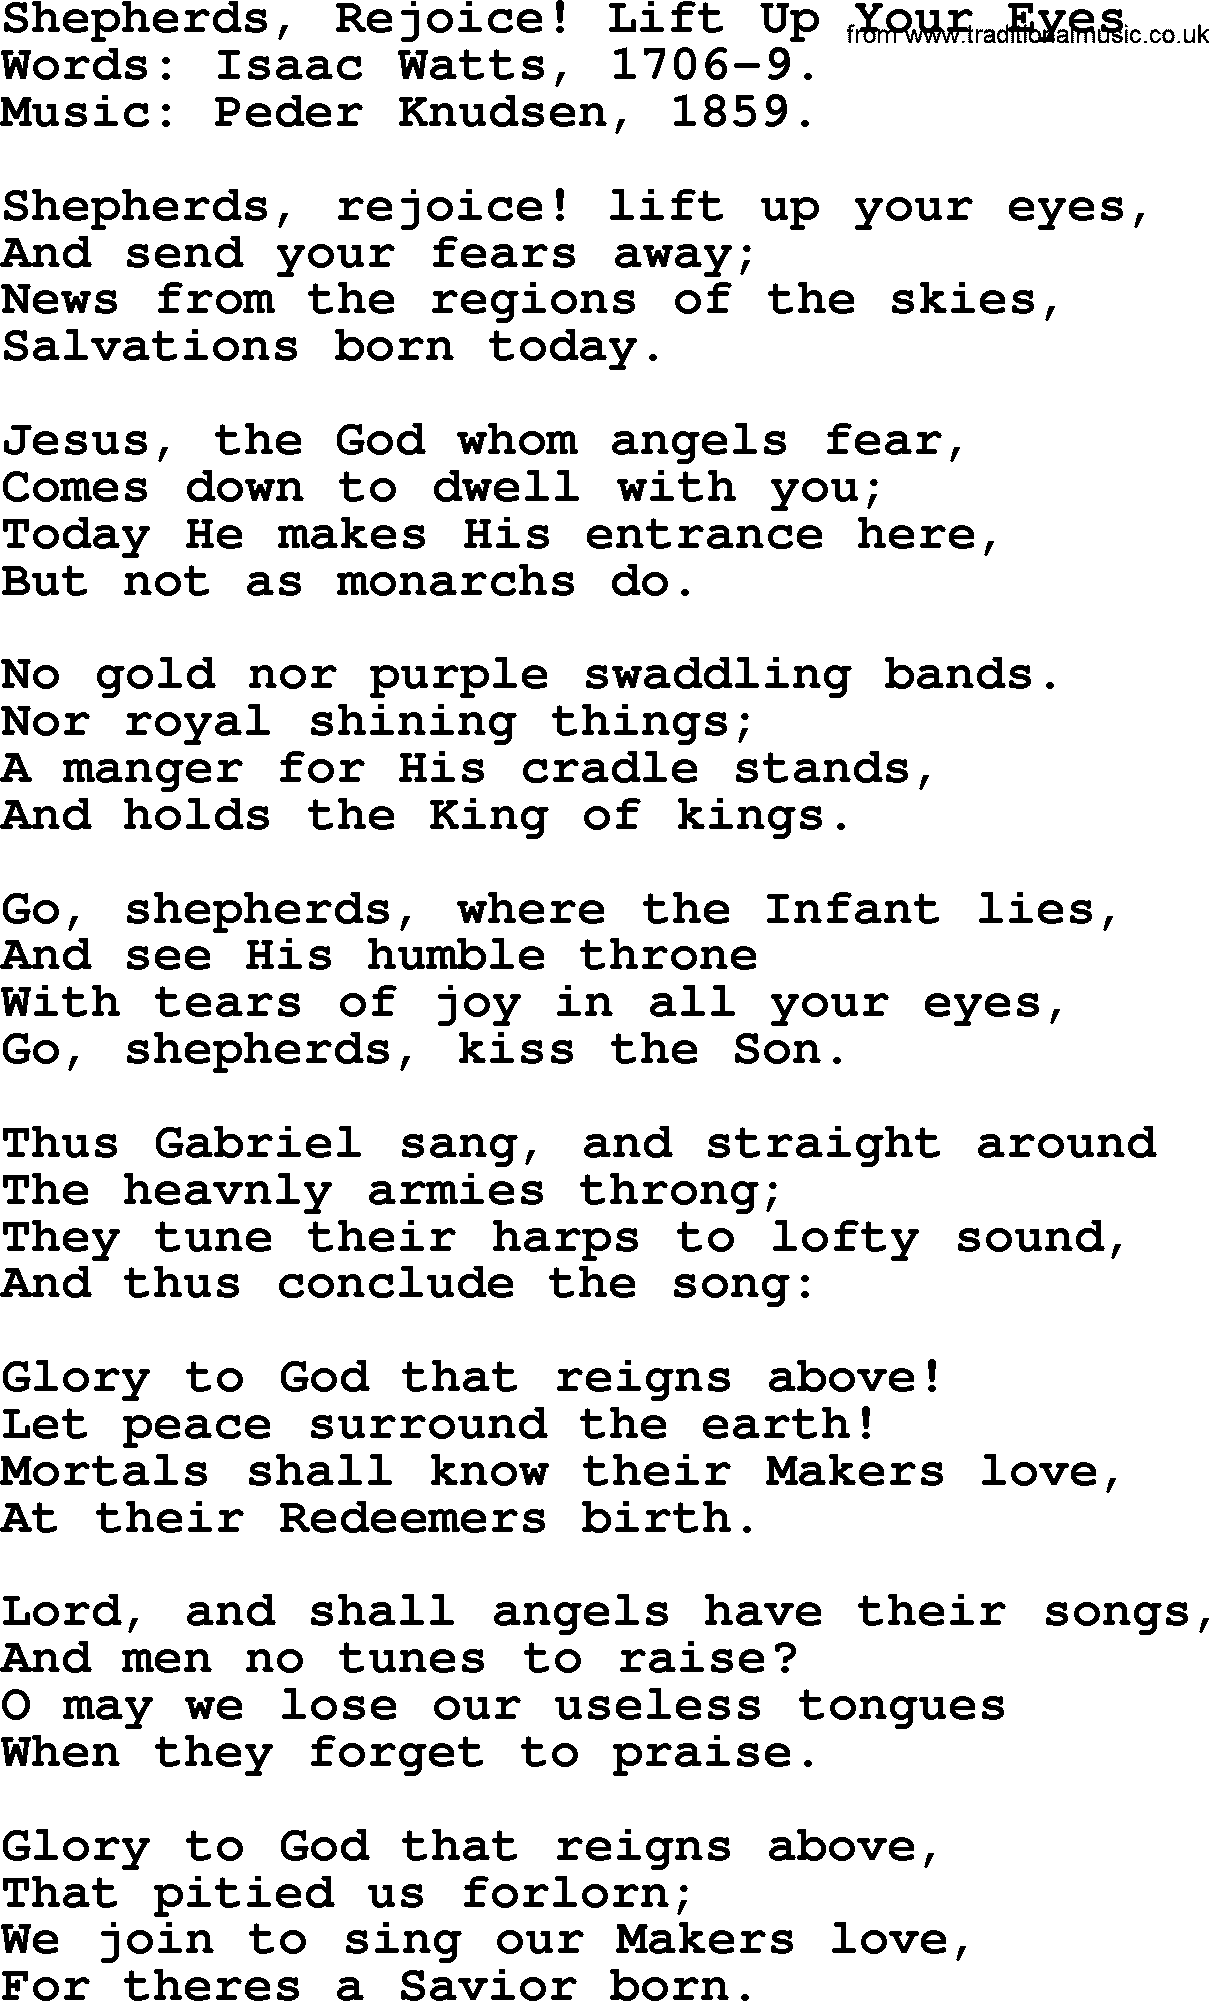 Isaac Watts Christian hymn: Shepherds, Rejoice! Lift Up Your Eyes- lyricss